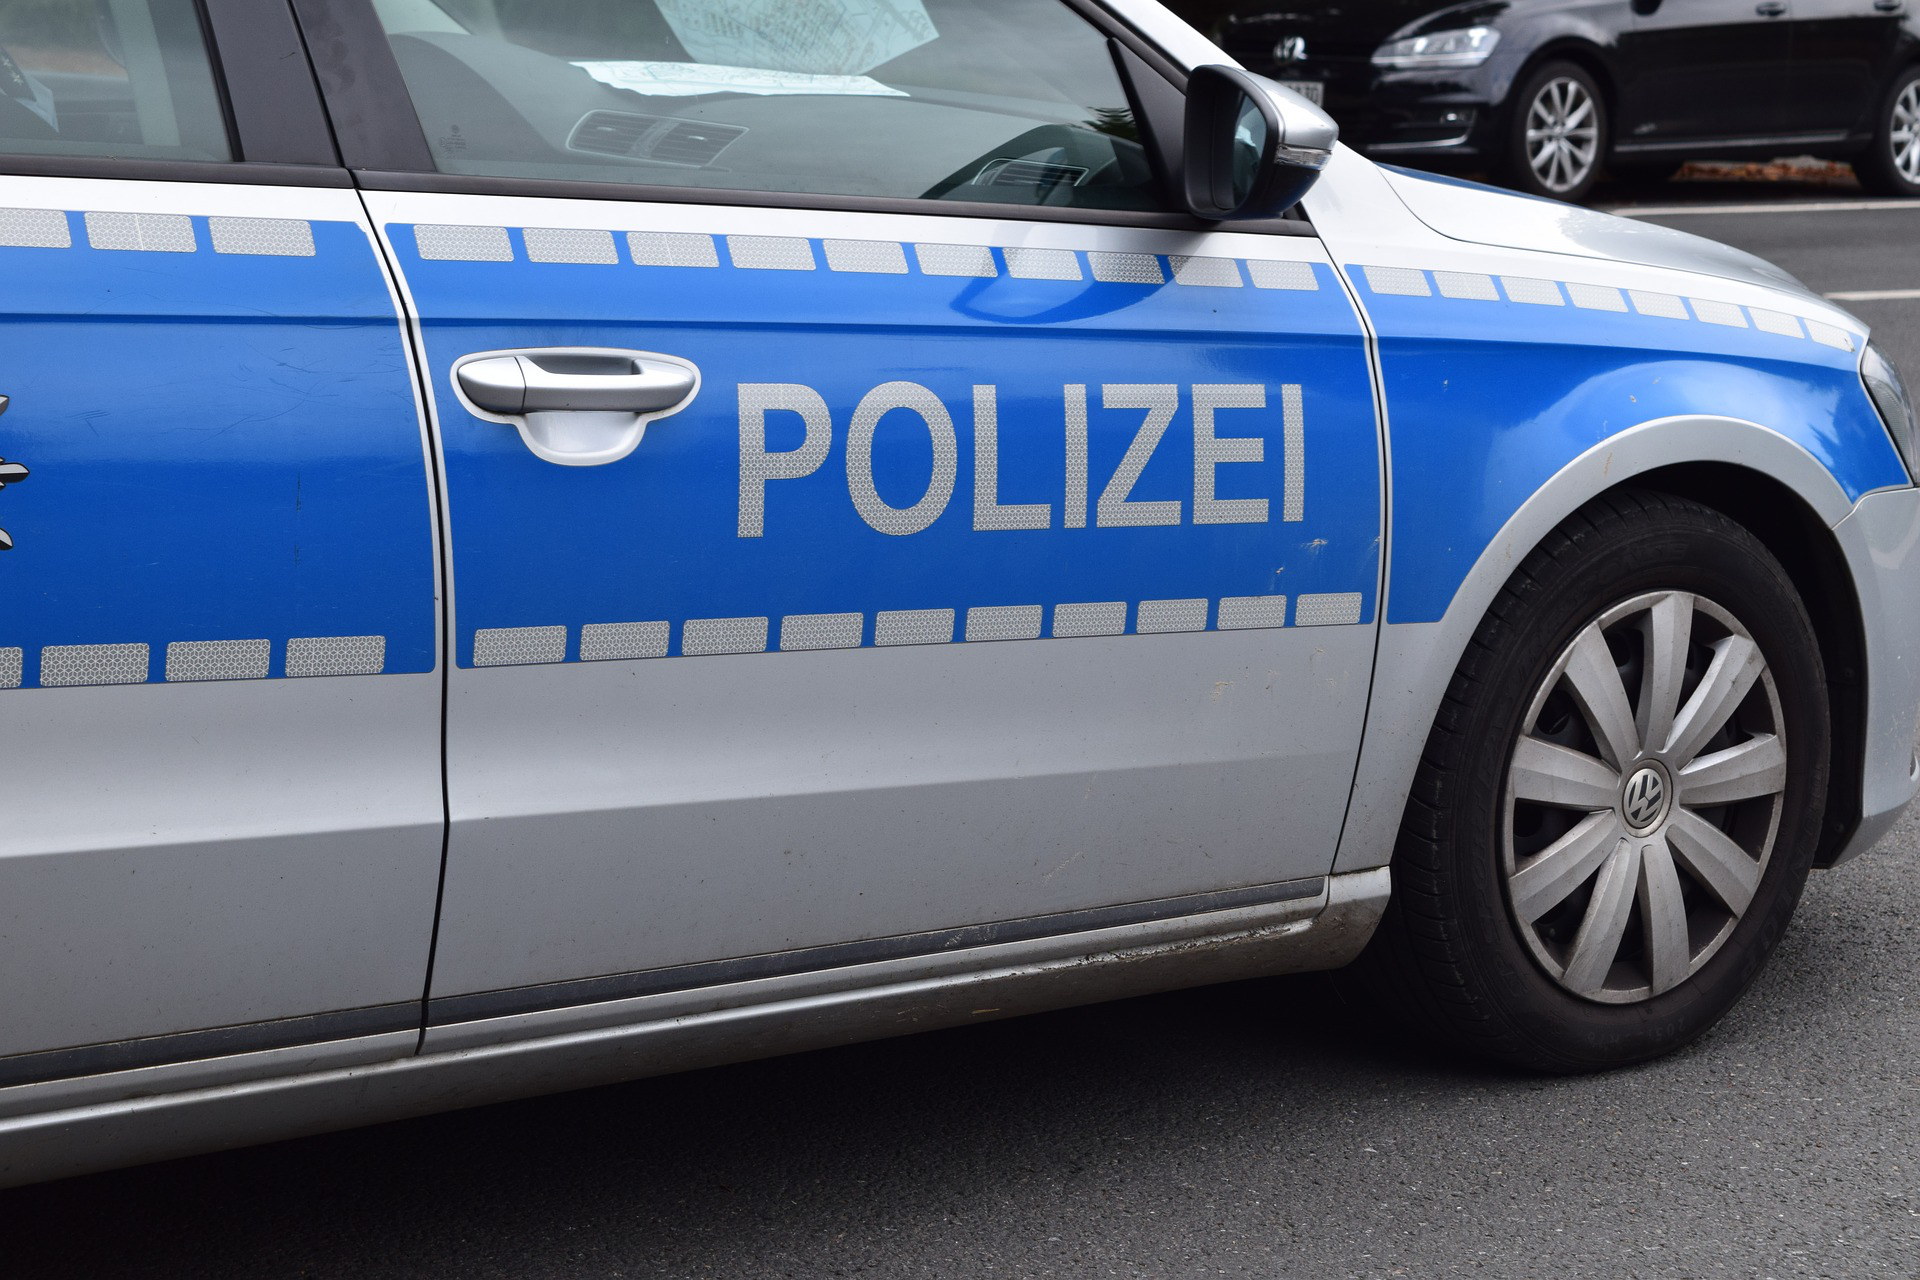 Ruhestörender Lärm hält Schweriner Polizei in Atem